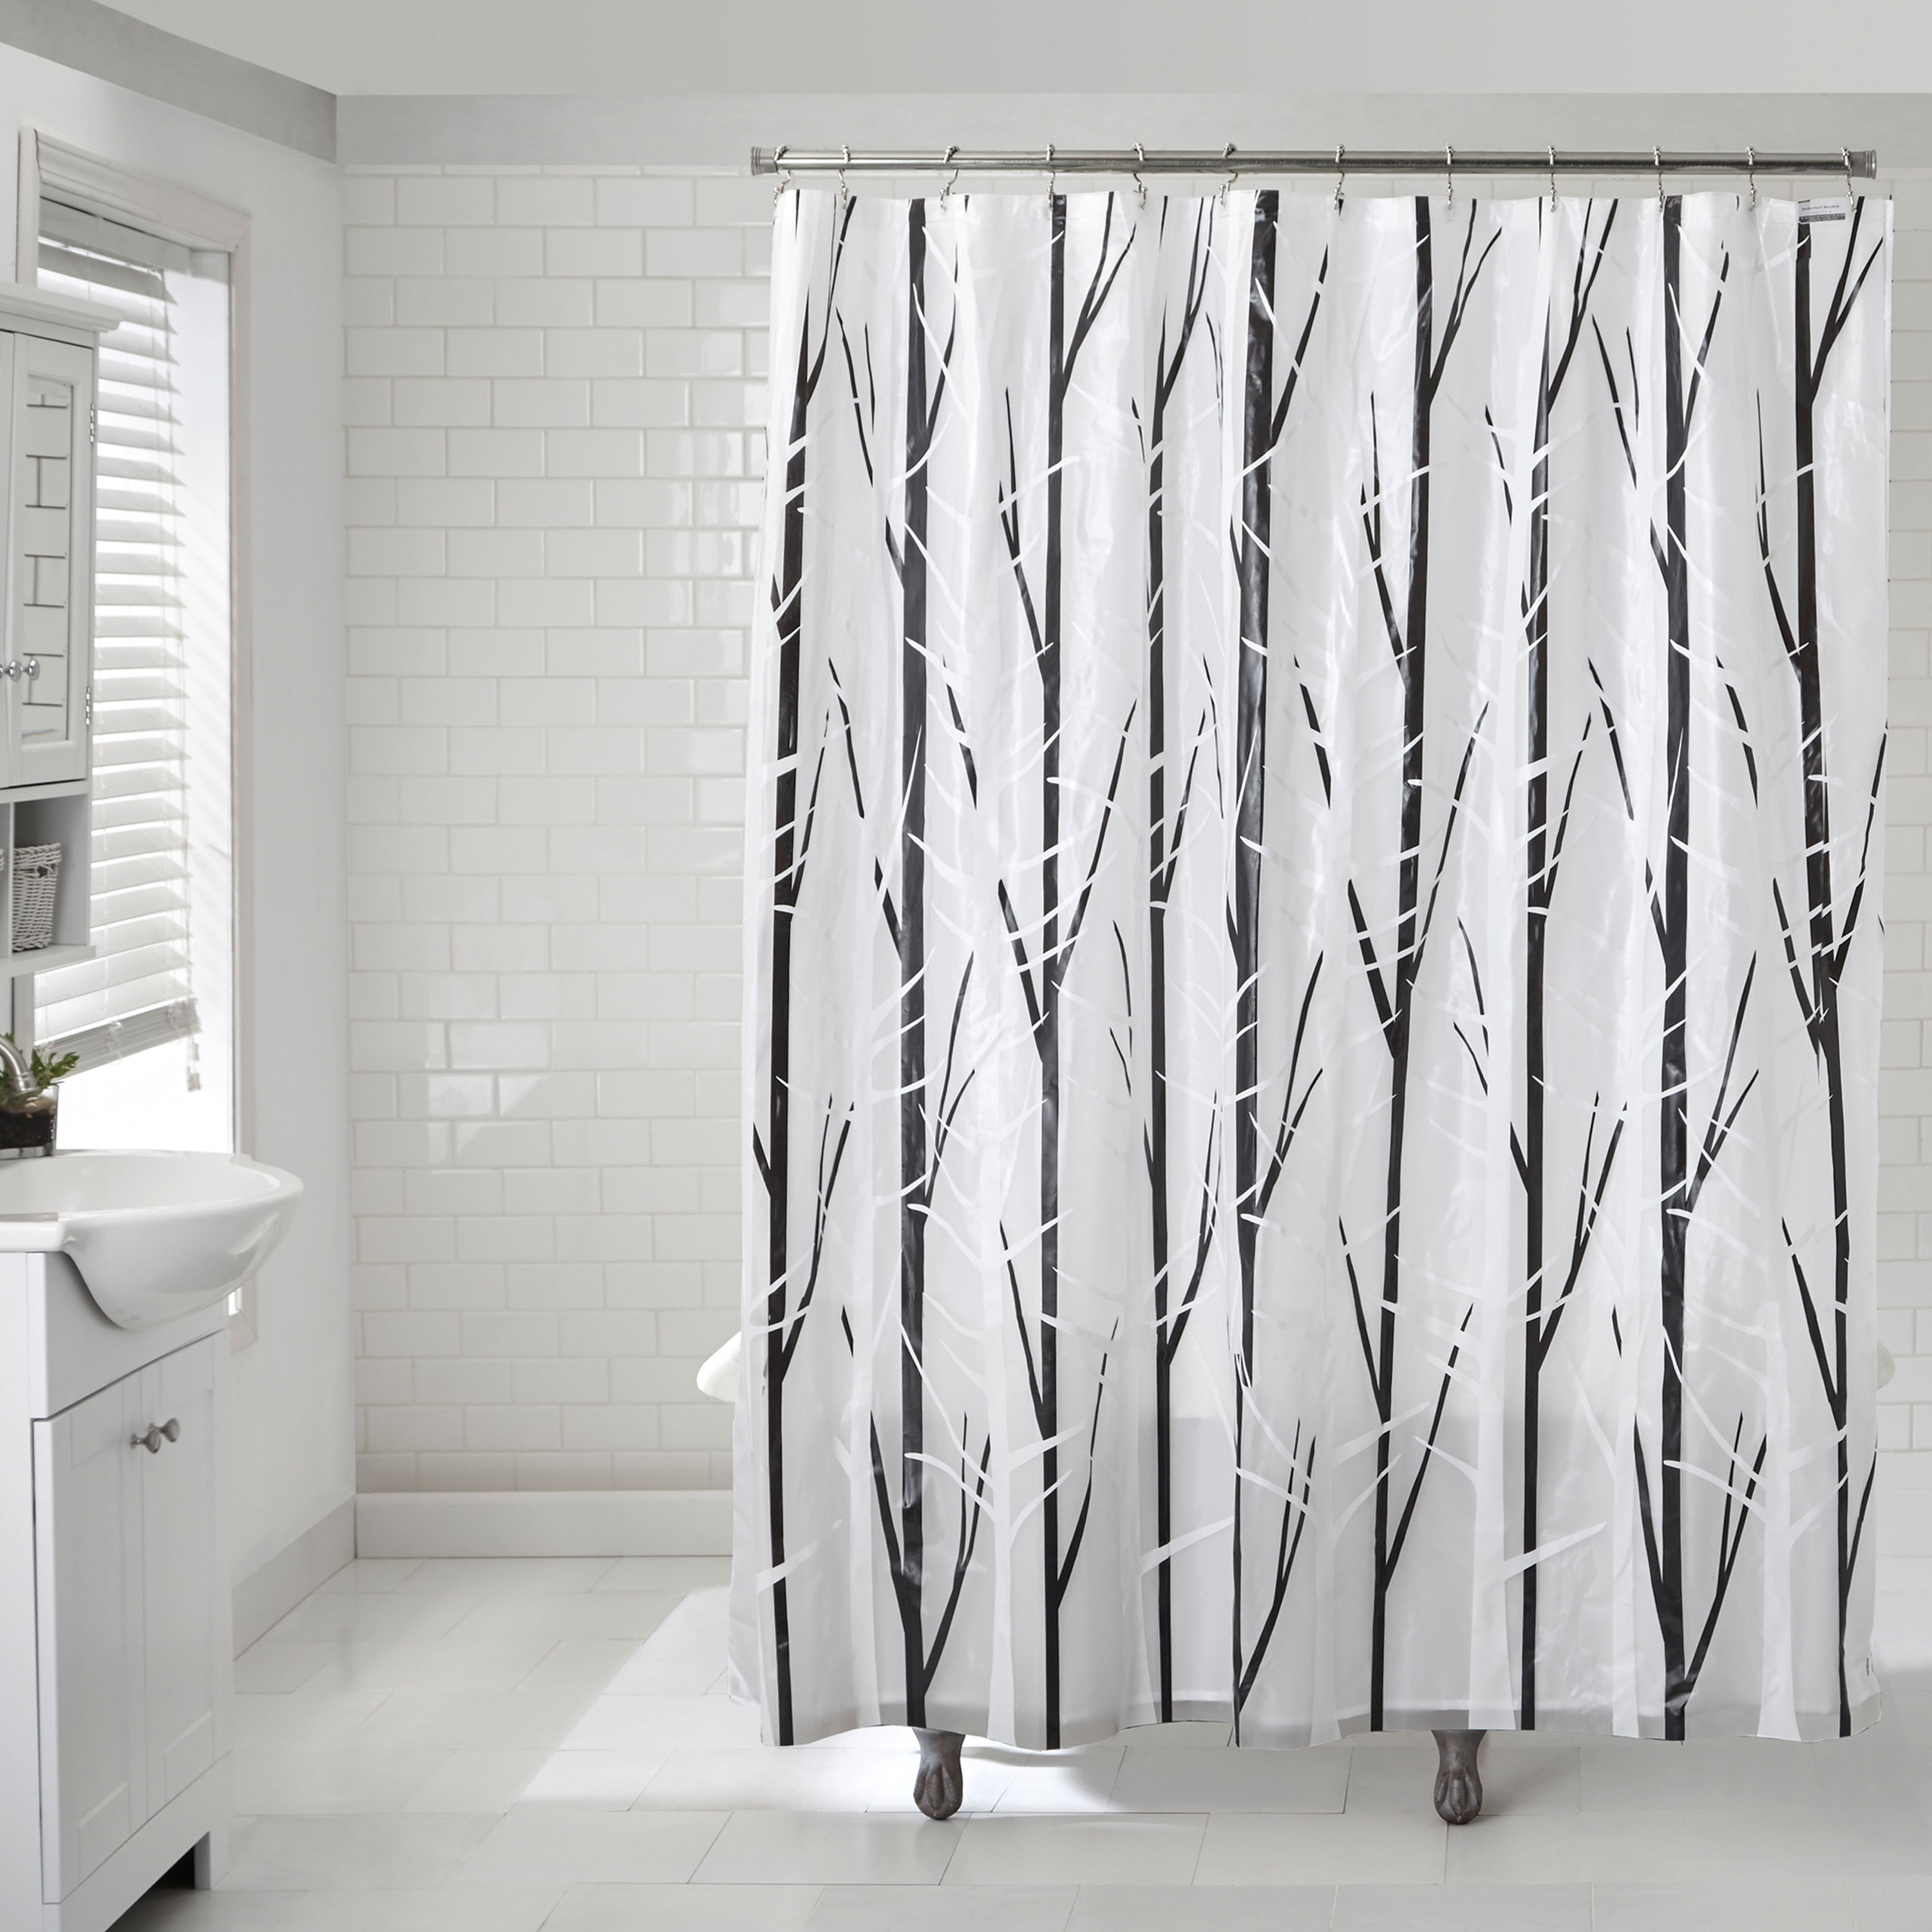 x 72 In White/Gray PEVA Seashell Shower Curtain Set Zenith Zenna Home 70 In